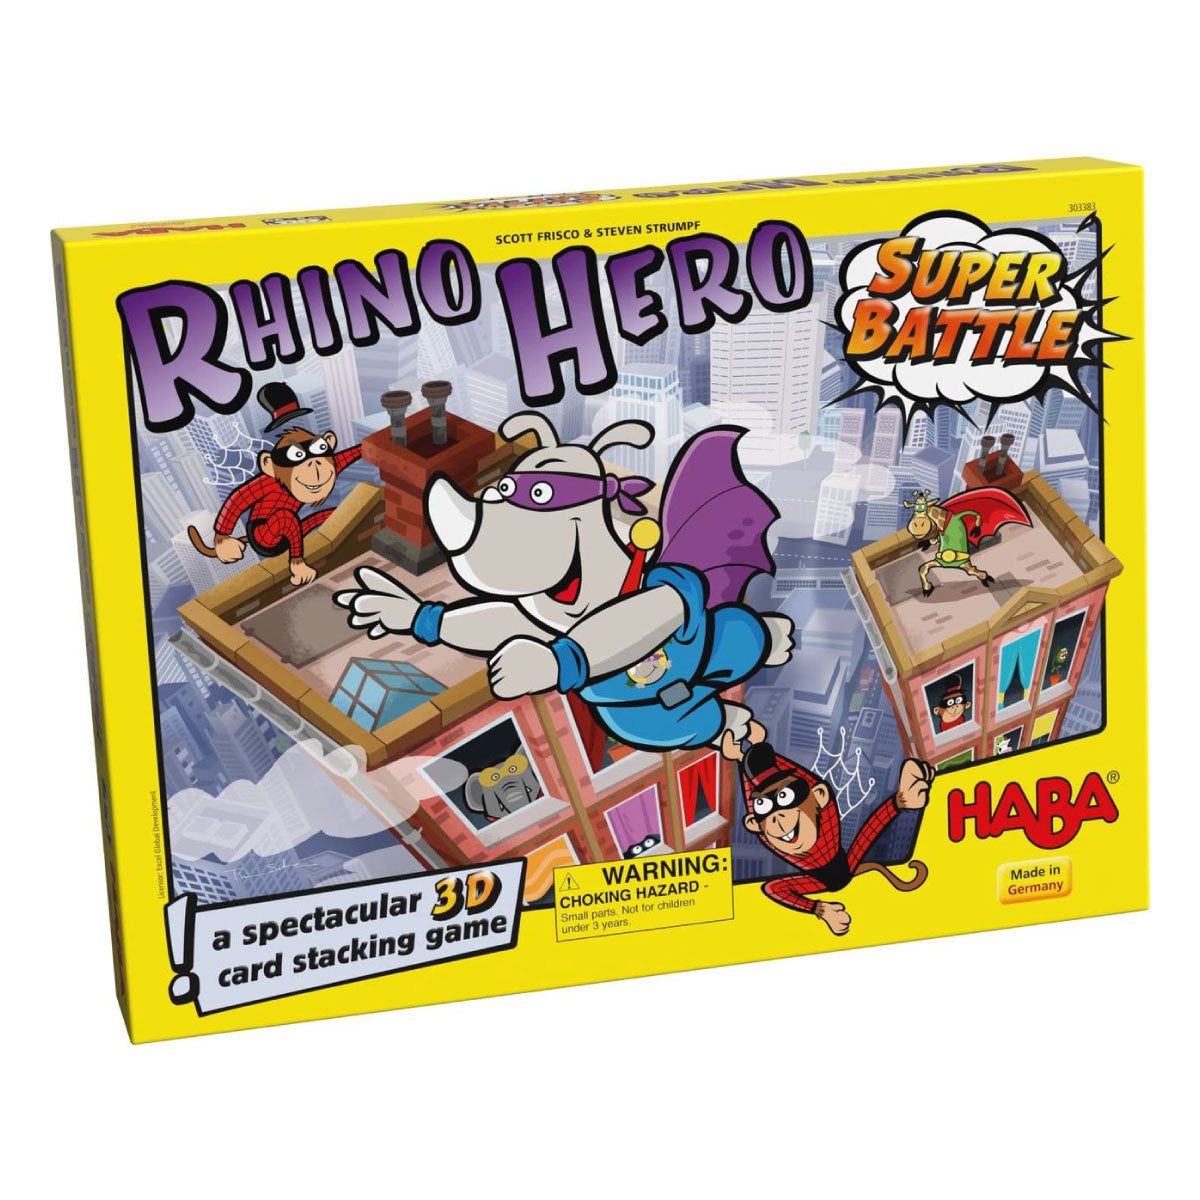 Rhino Hero Super Battle Stacking Card Game from Haba